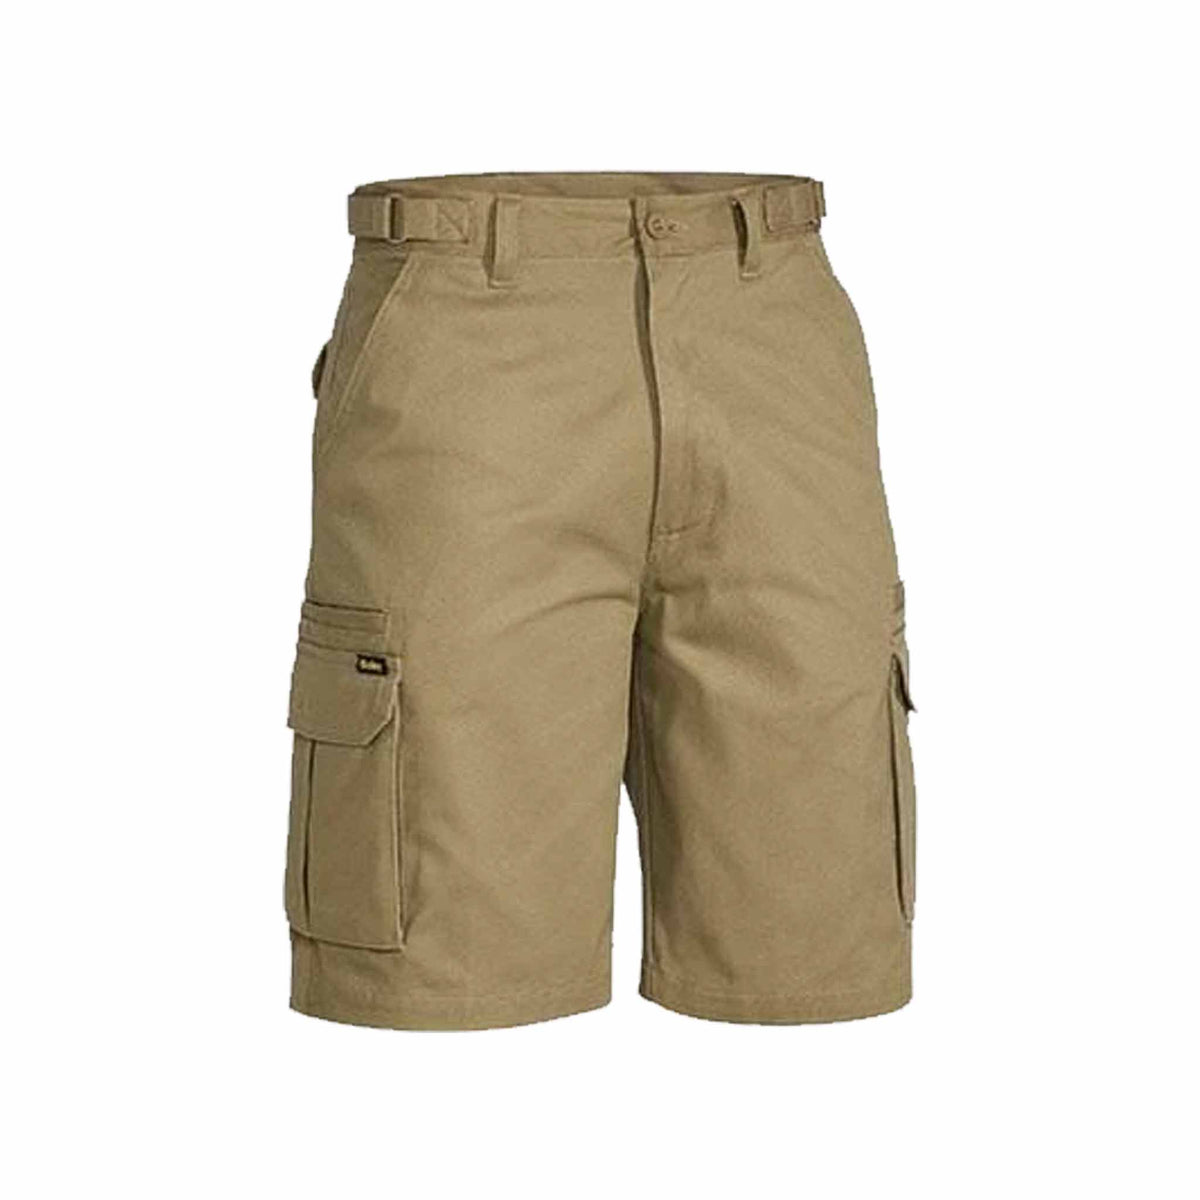 khaki 8 pocket cargo shorts